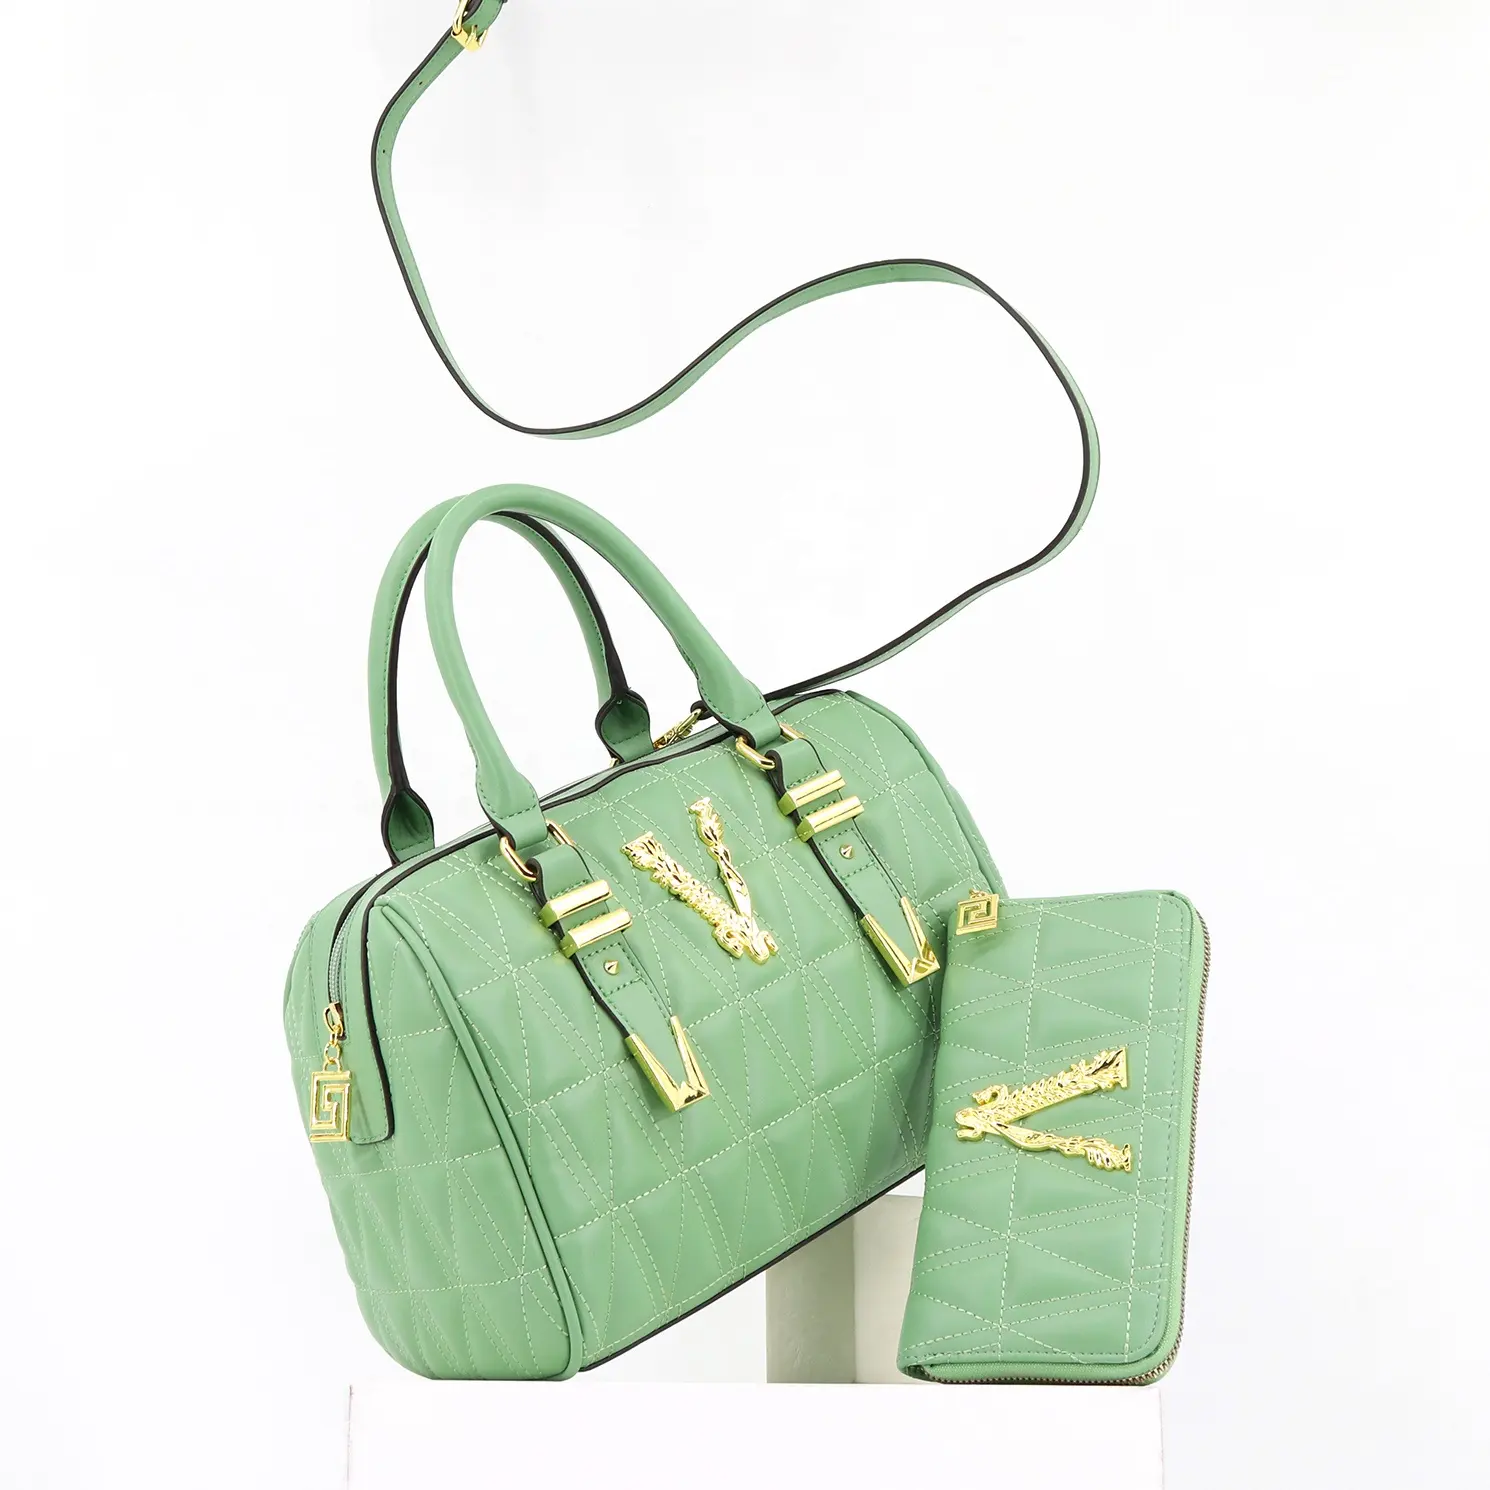 textures pillow female shoulder bags eye-catching handbags for women fashion trending ladies bags quality handbags sets 29 cm